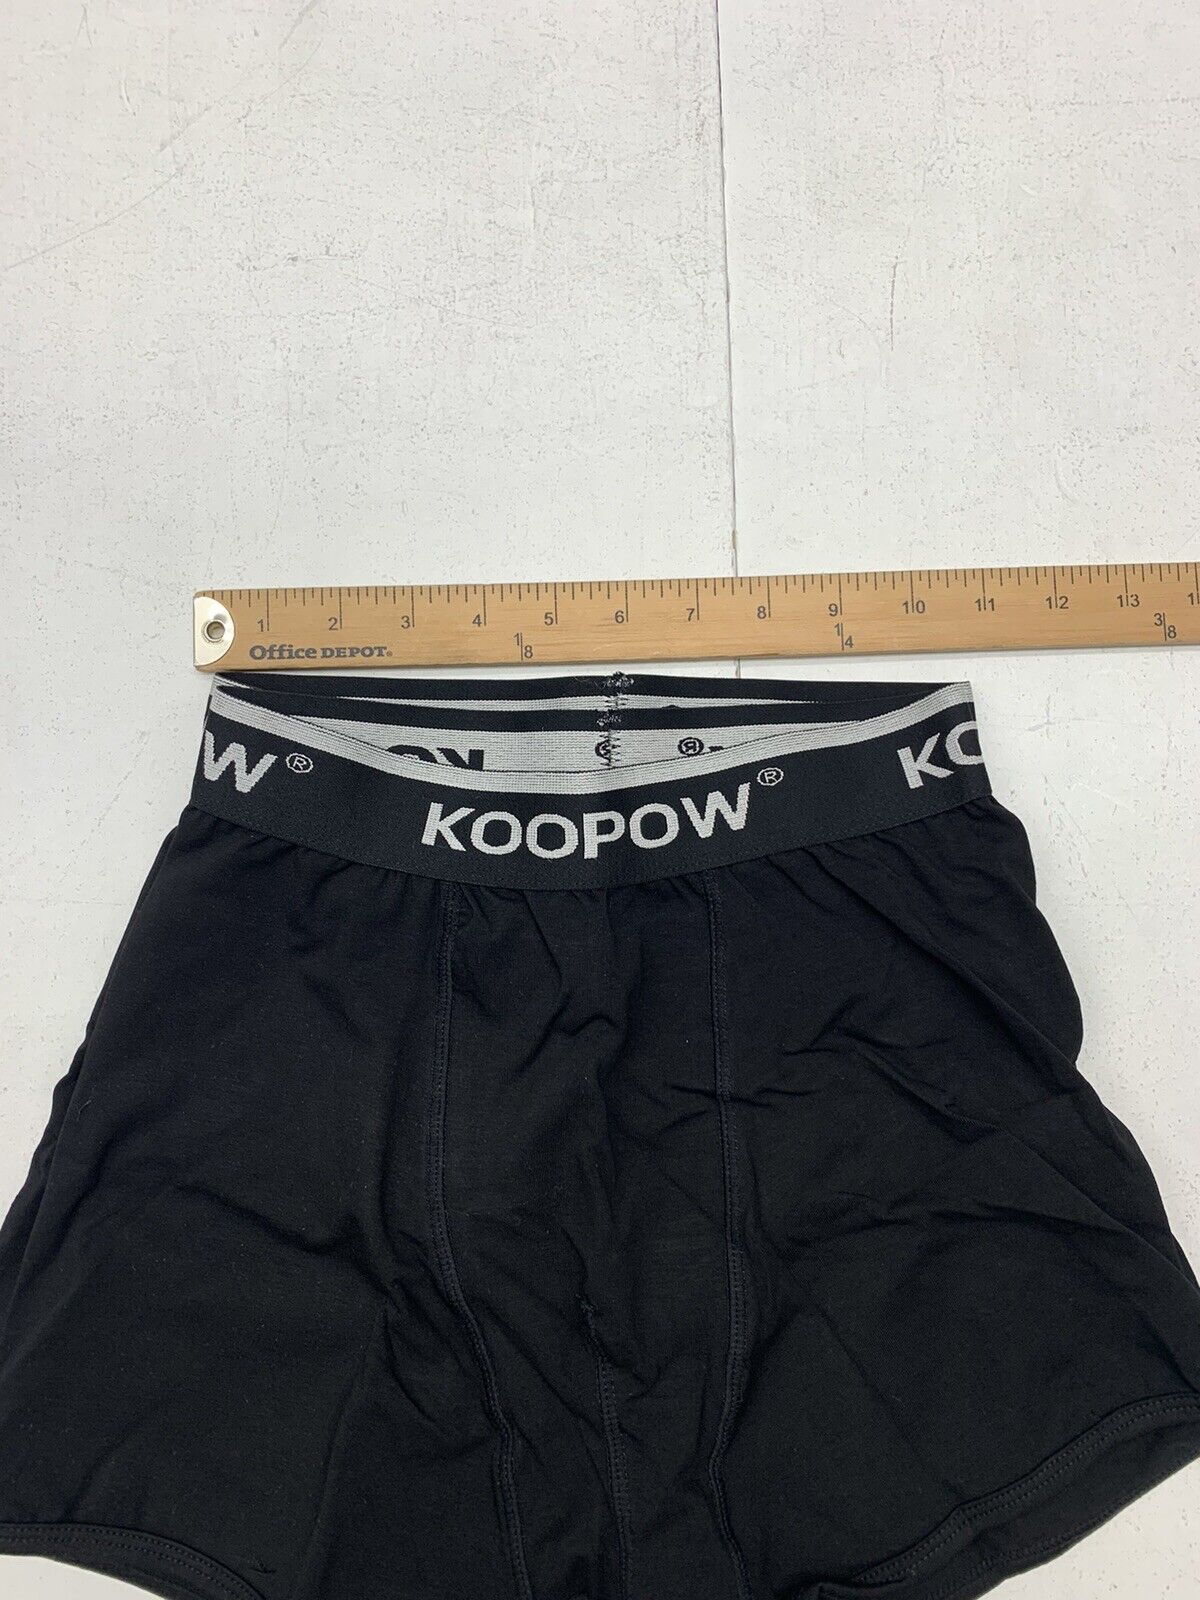 Koopow Mens Girdle Underwear Size Large - beyond exchange